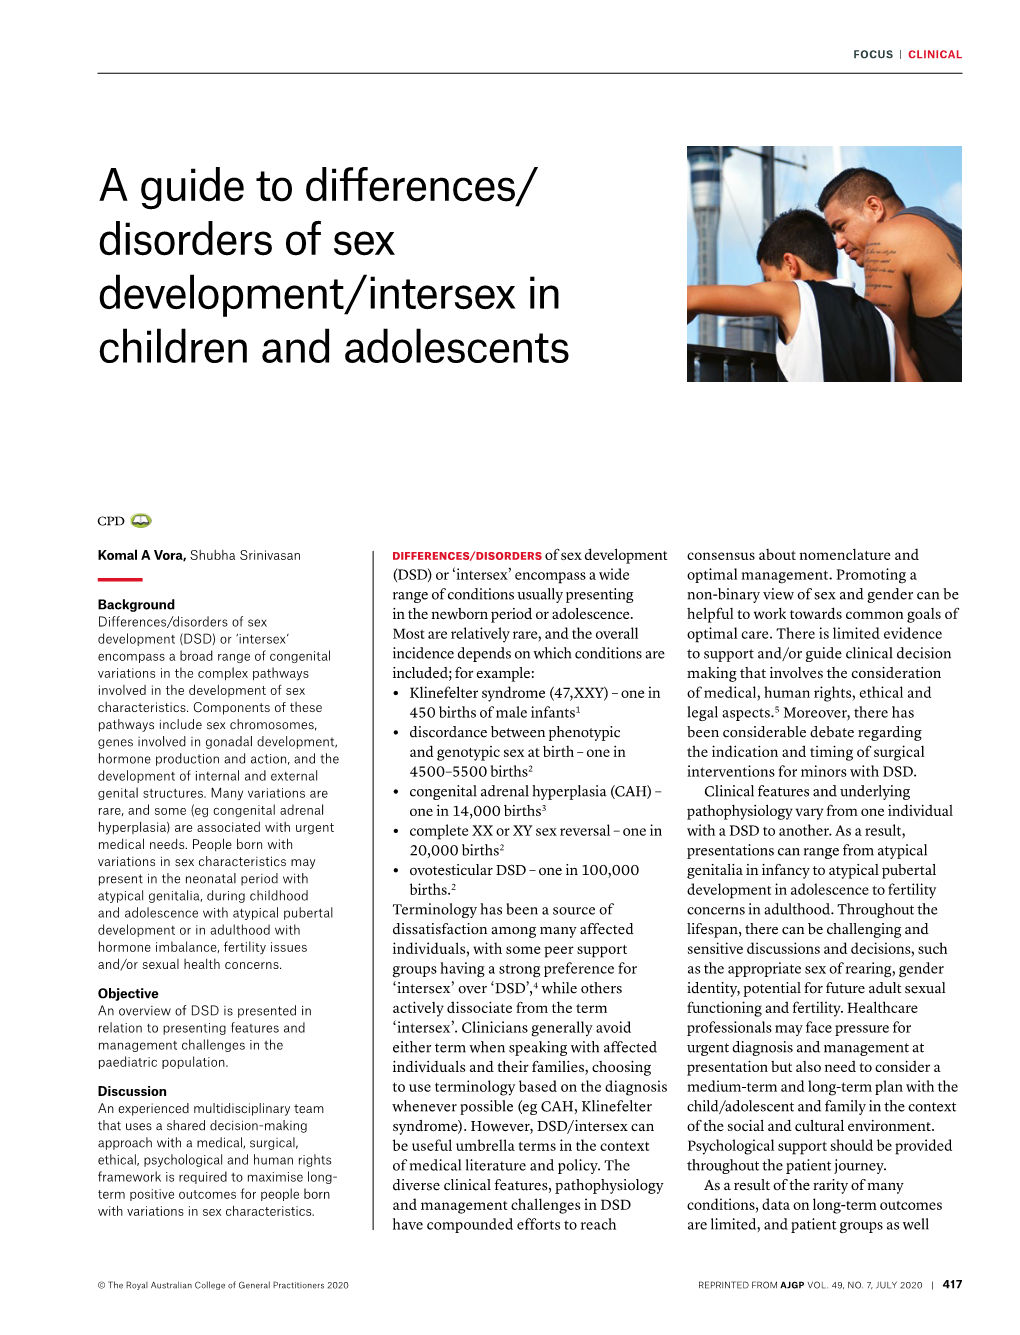 Disorders of Sex Development/Intersex in Children and Adolescents